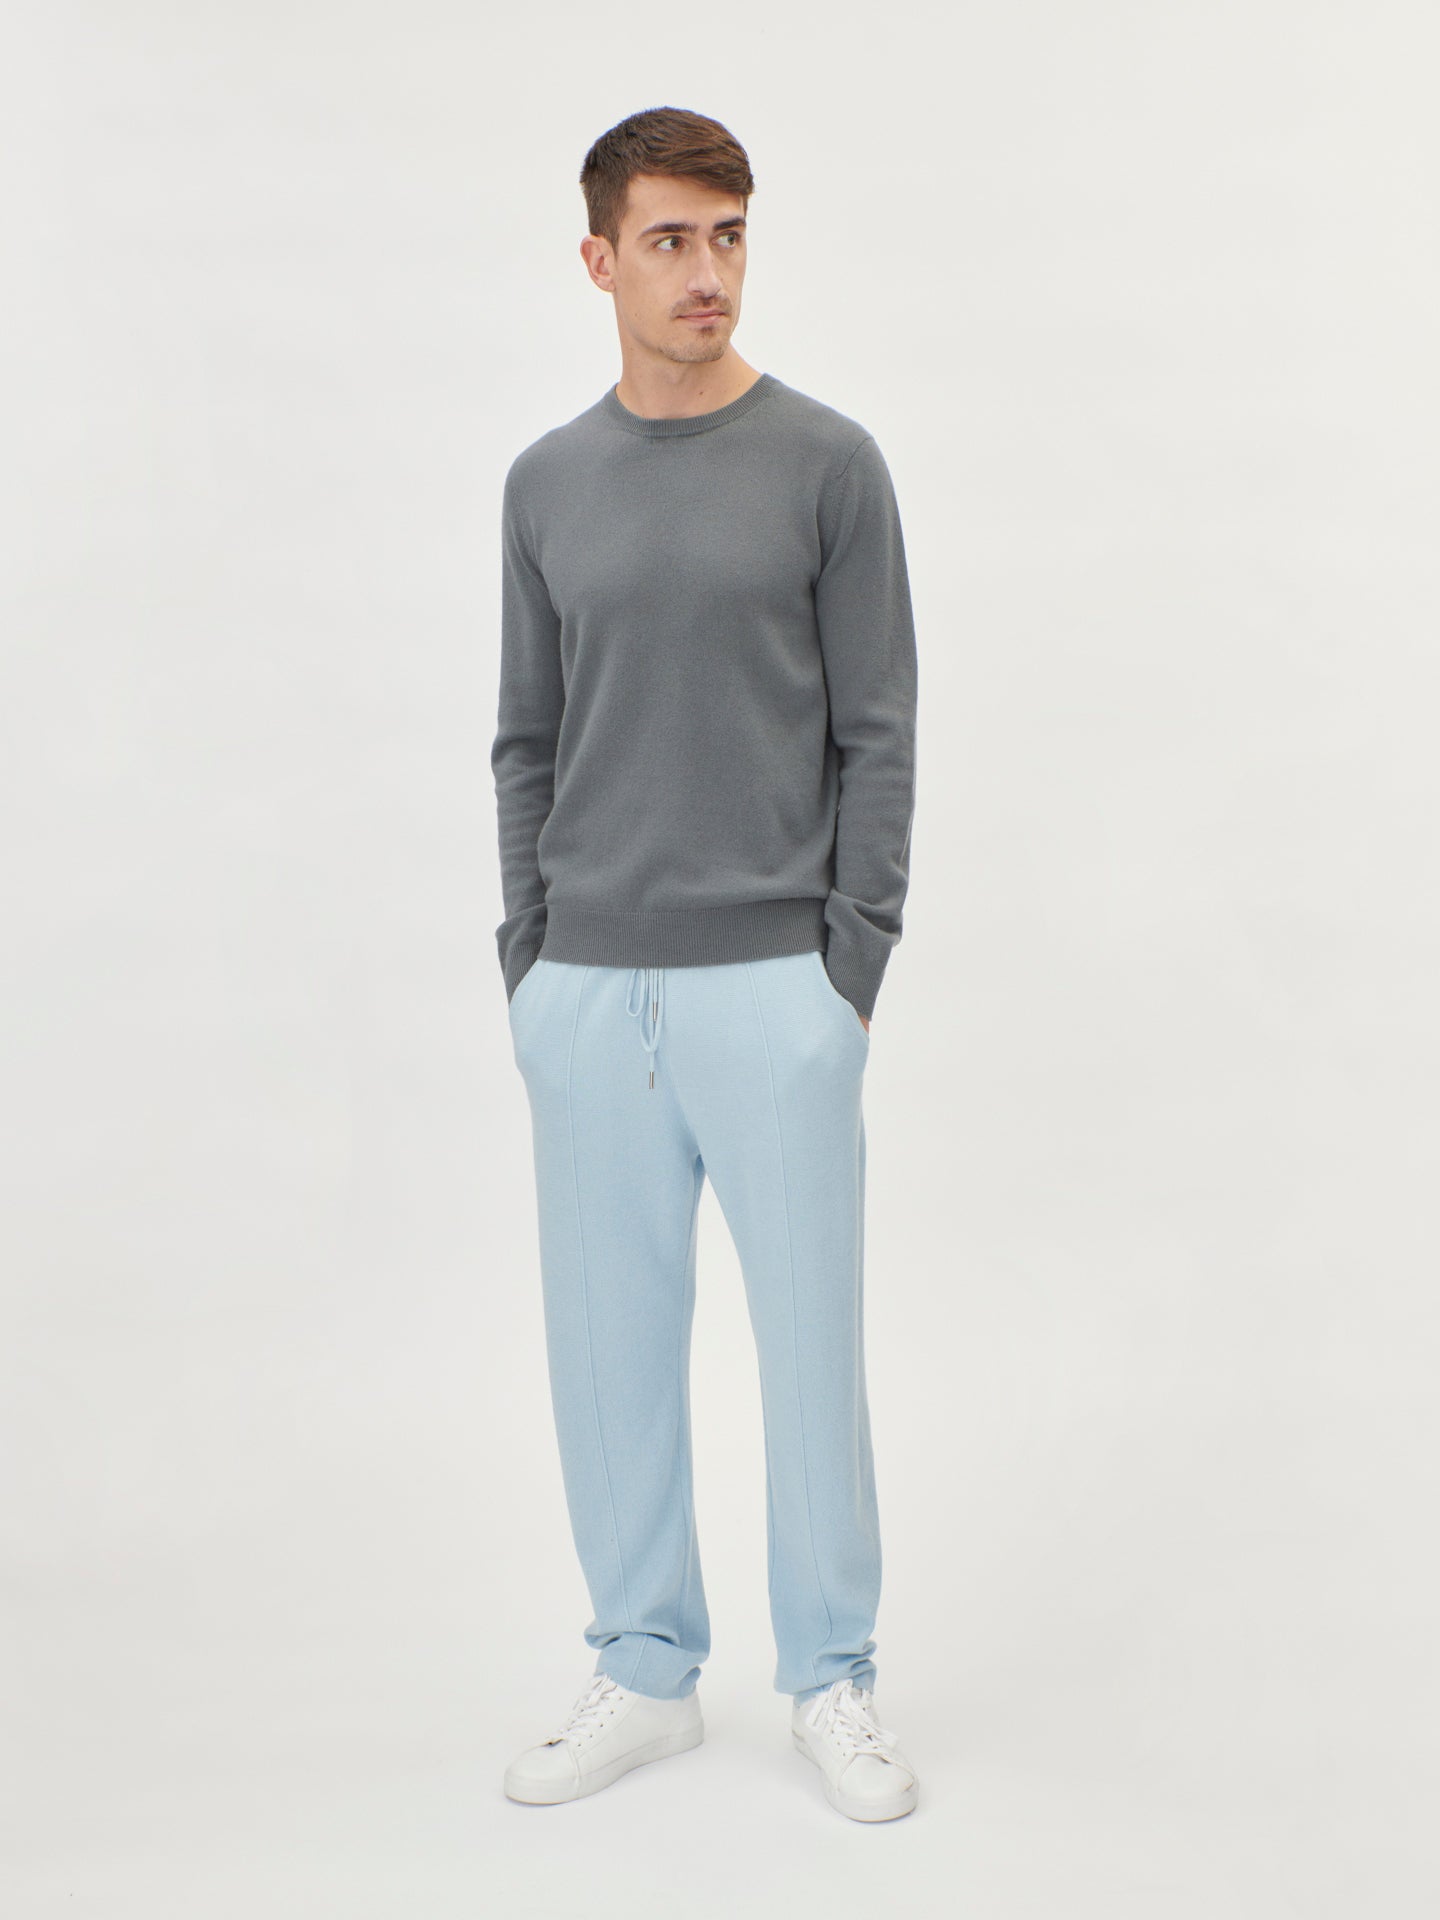 Men's Cashmere Basic Slim Fit Crew Neck Neutral Gray - Gobi Cashmere